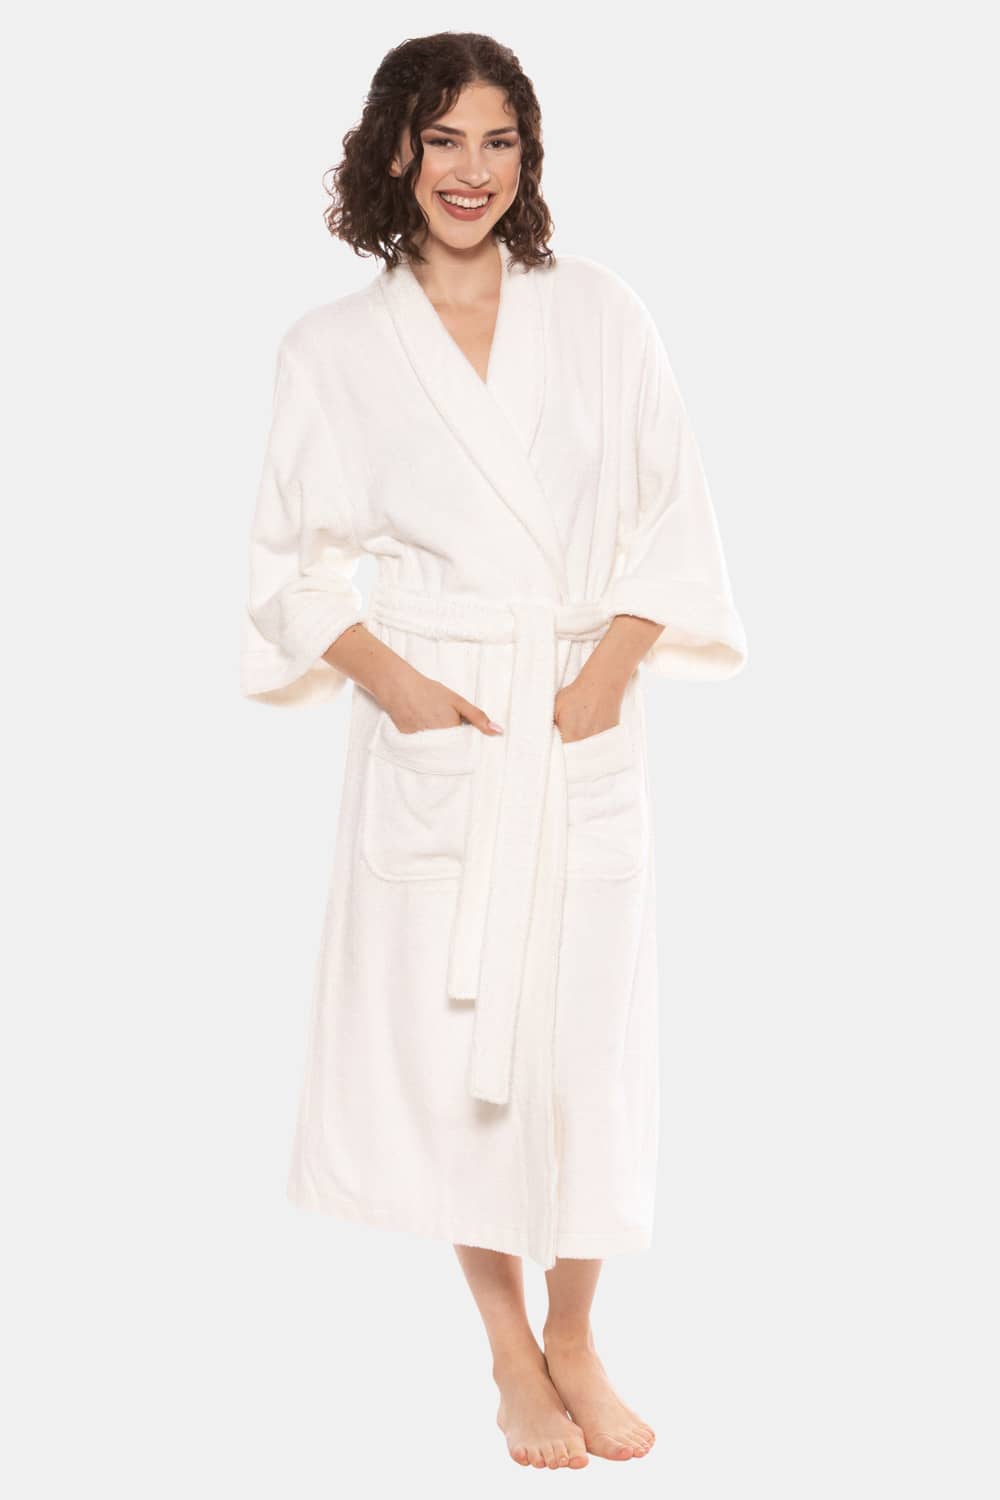 Texere Women's Terry Cloth Bathrobe Womens>Spa>Robe Fishers Finery White S/M 